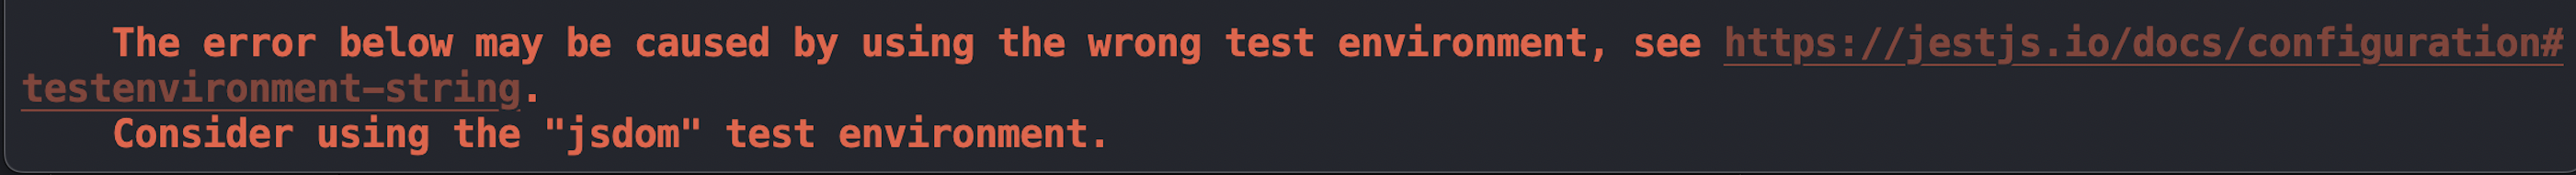 Jest error: Consider using the "jsdom" test environment.